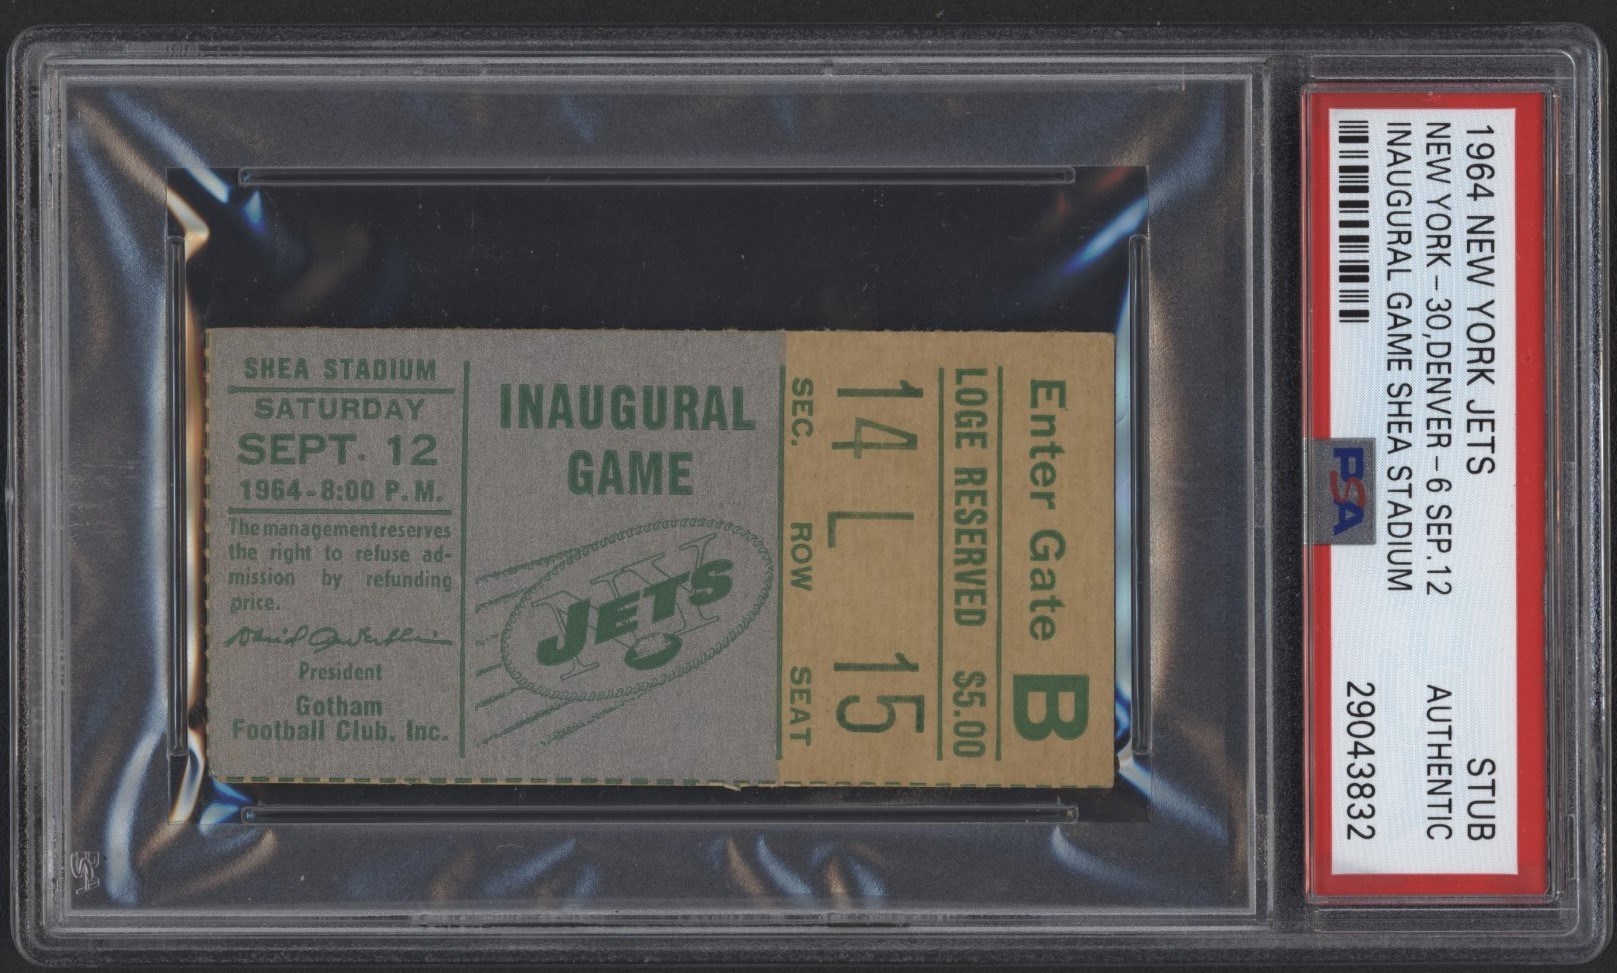 - 1964 New York Jets Inaugural Game at Shea Stadium Ticket Stub